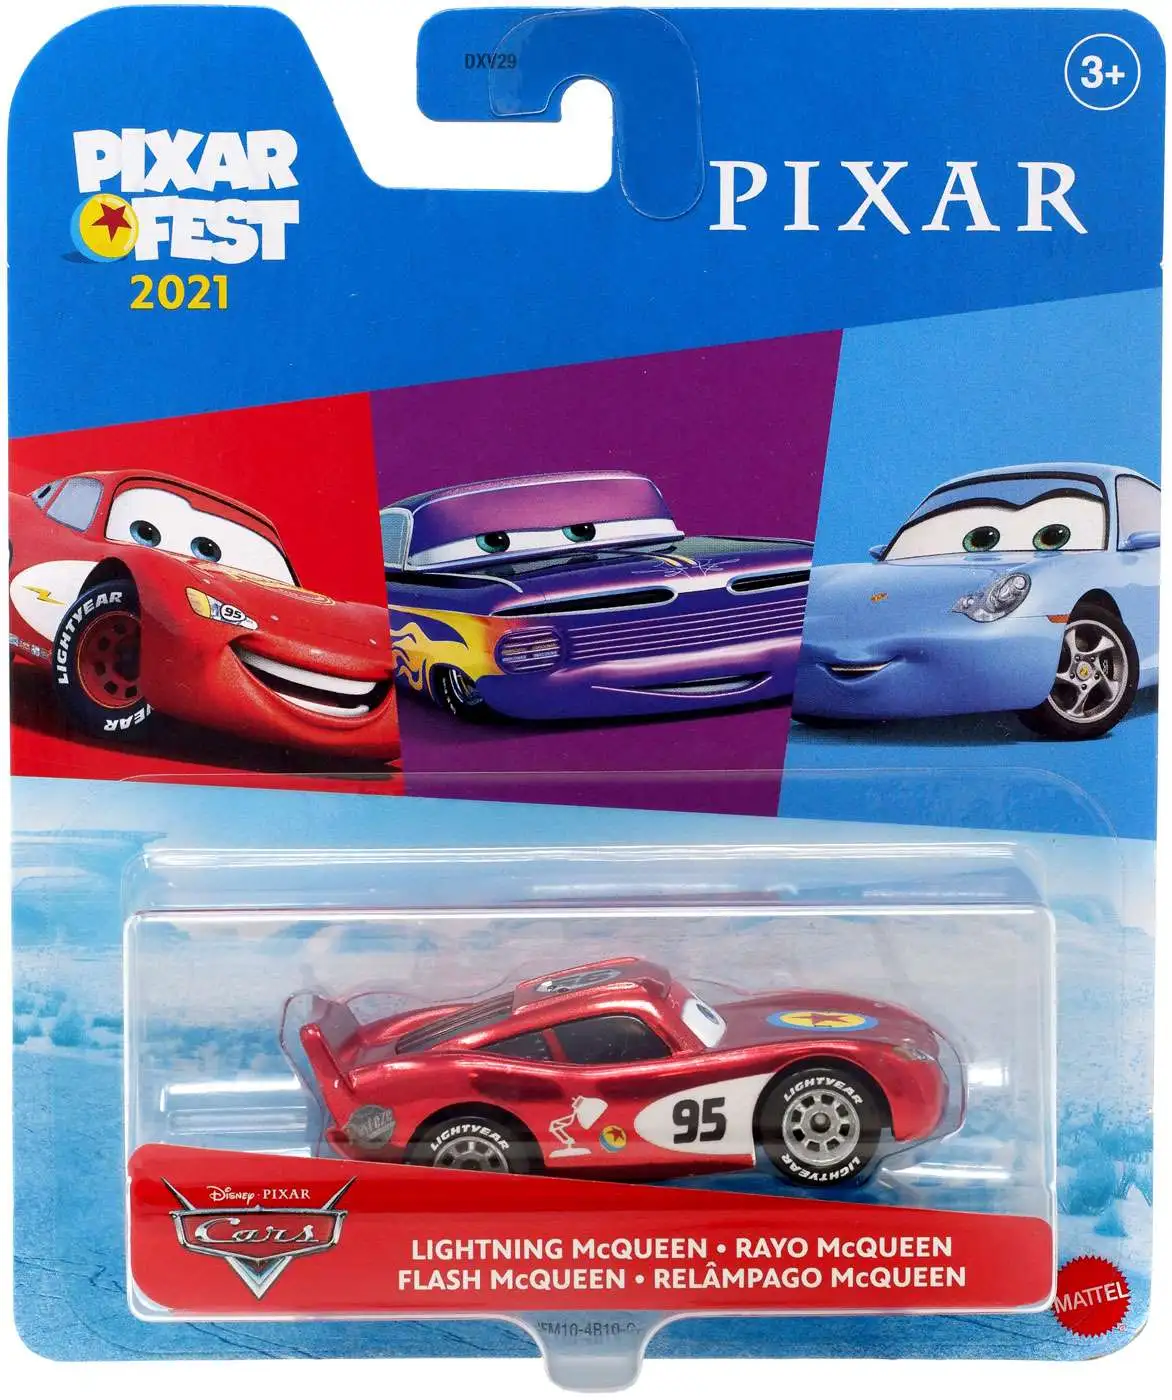 Die Cast Cars Vehicles Play Set Toy Car Children's Model Diecast Metal 1:48 1:55 